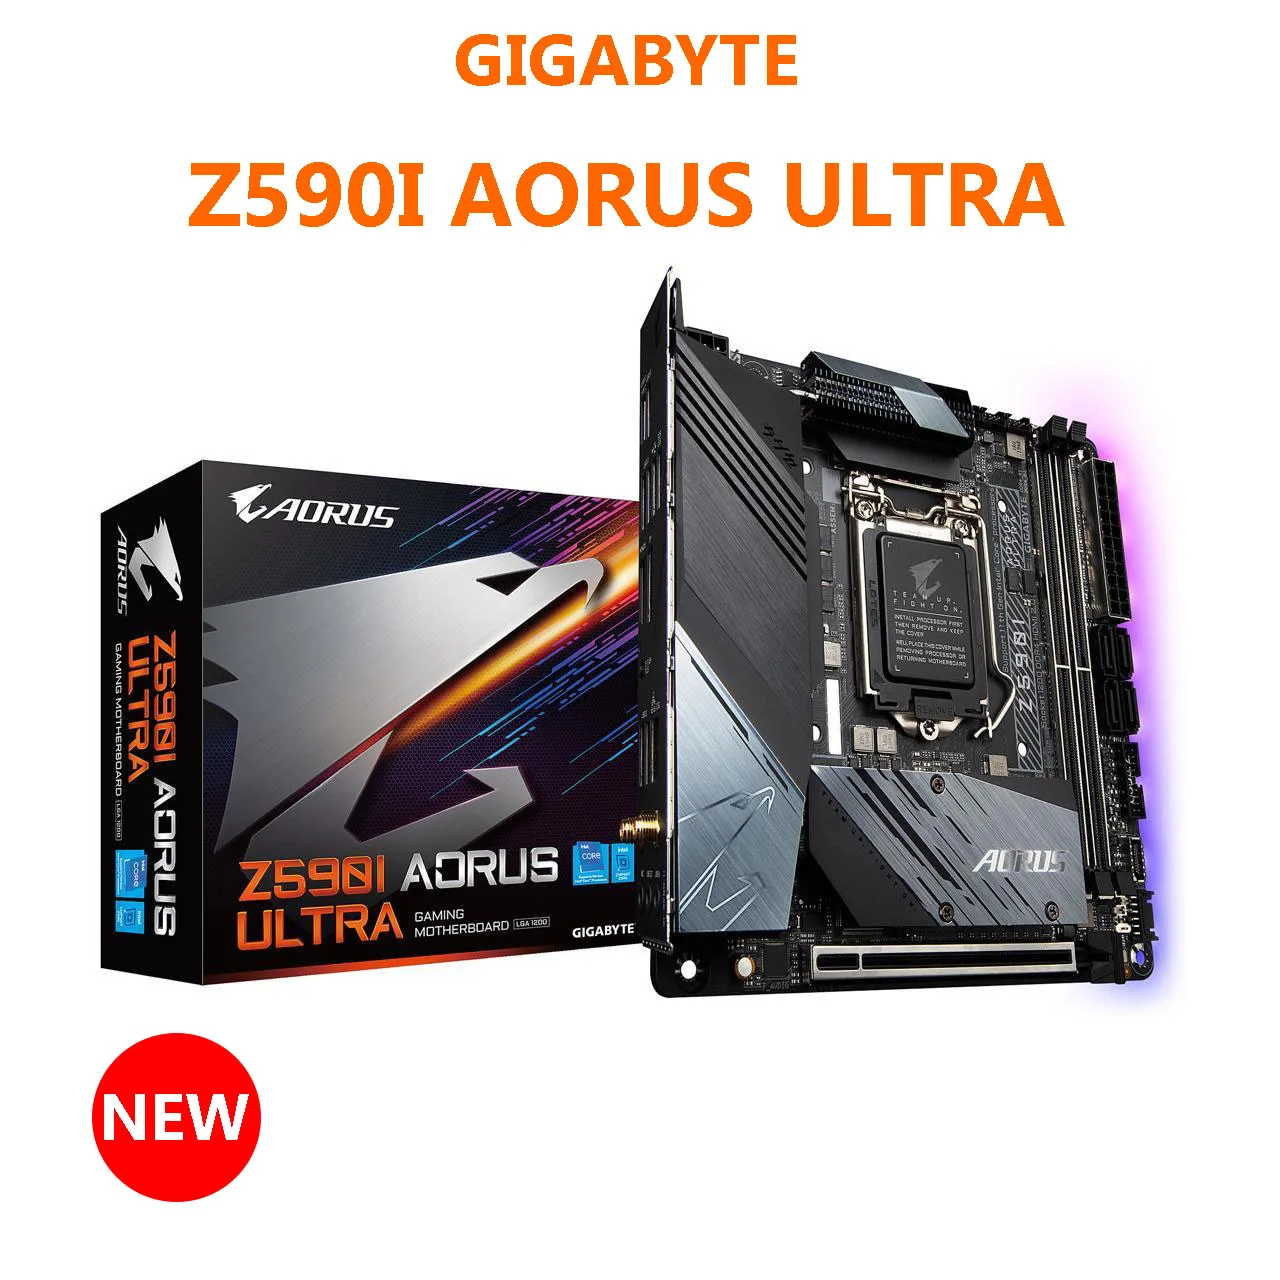 

For GIGABYTE Z590I AORUS ULTRA Computer Motherboard LGA 1200 Supports 11th/10th Gen Core Intel Z590 Mini-ITX Dual M.2 PCIe 4.0